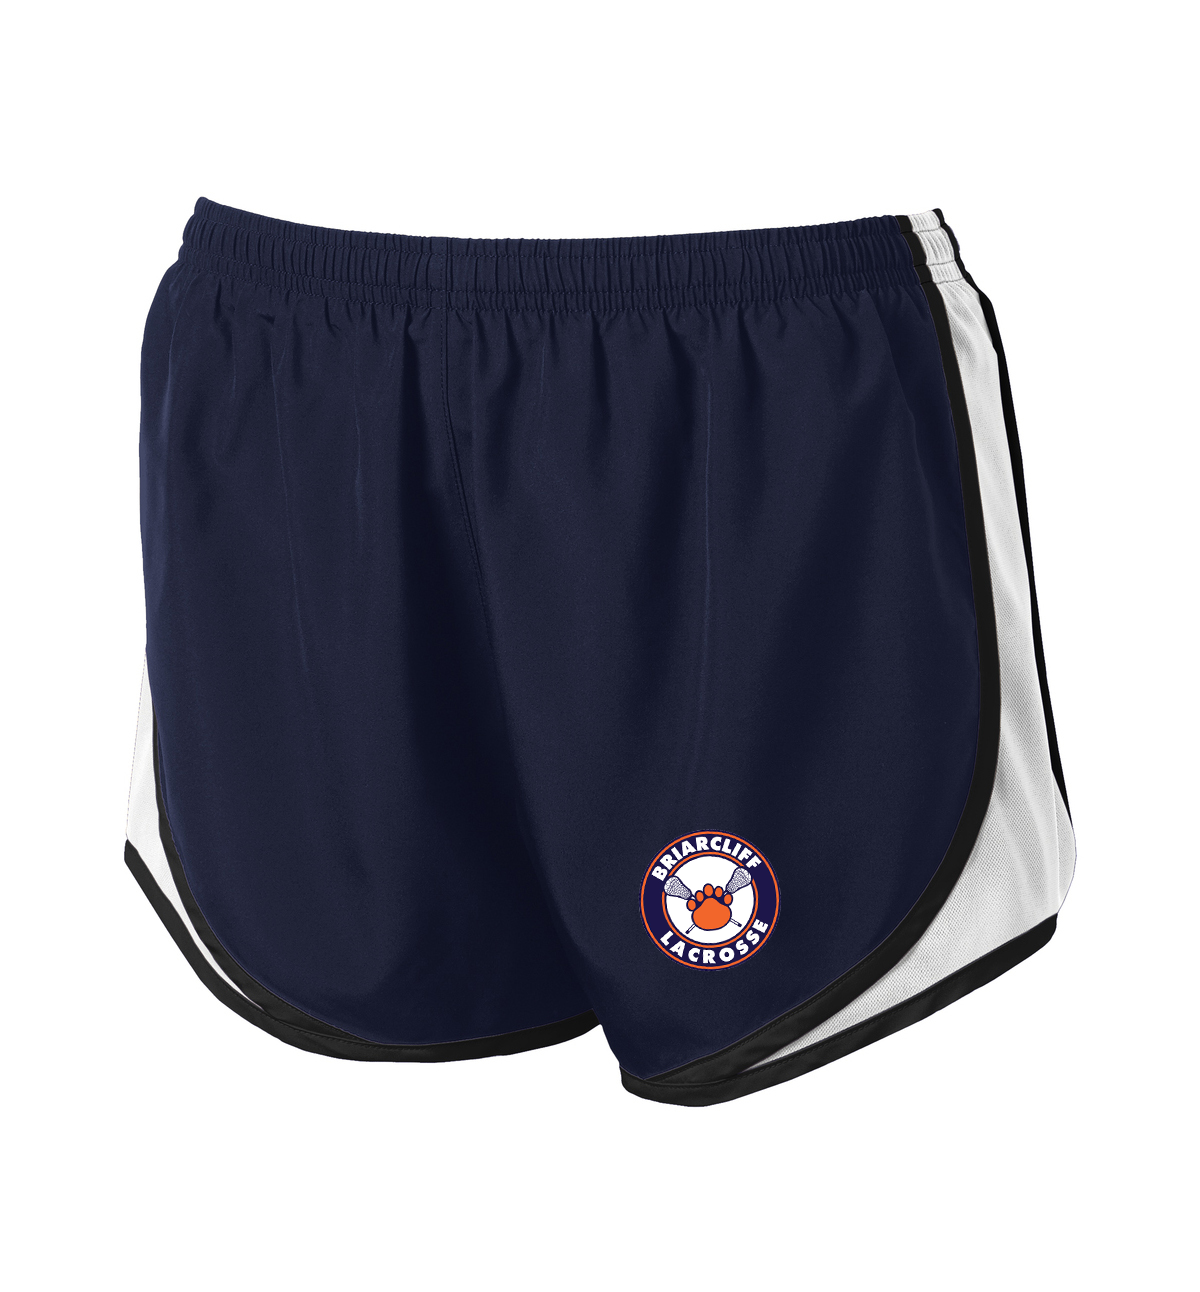 Briarcliff Lacrosse Navy/White Women's Shorts